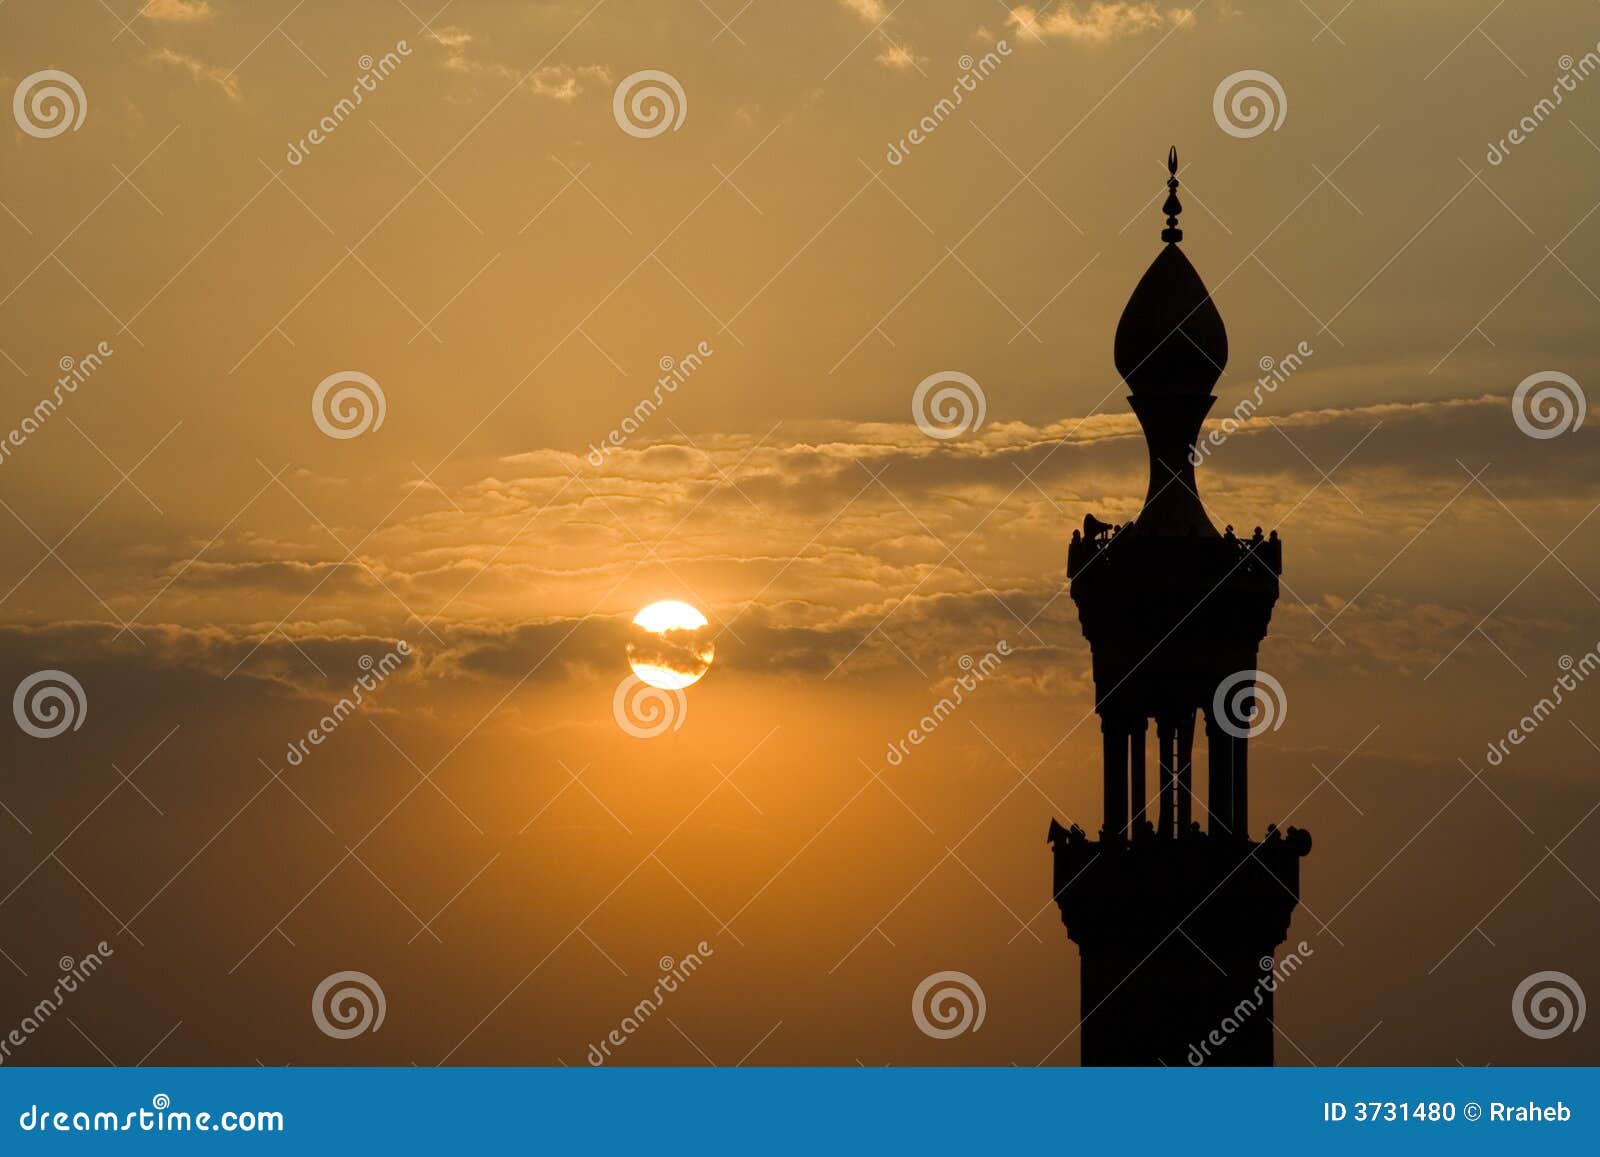 cairo mosque minaret at dusk